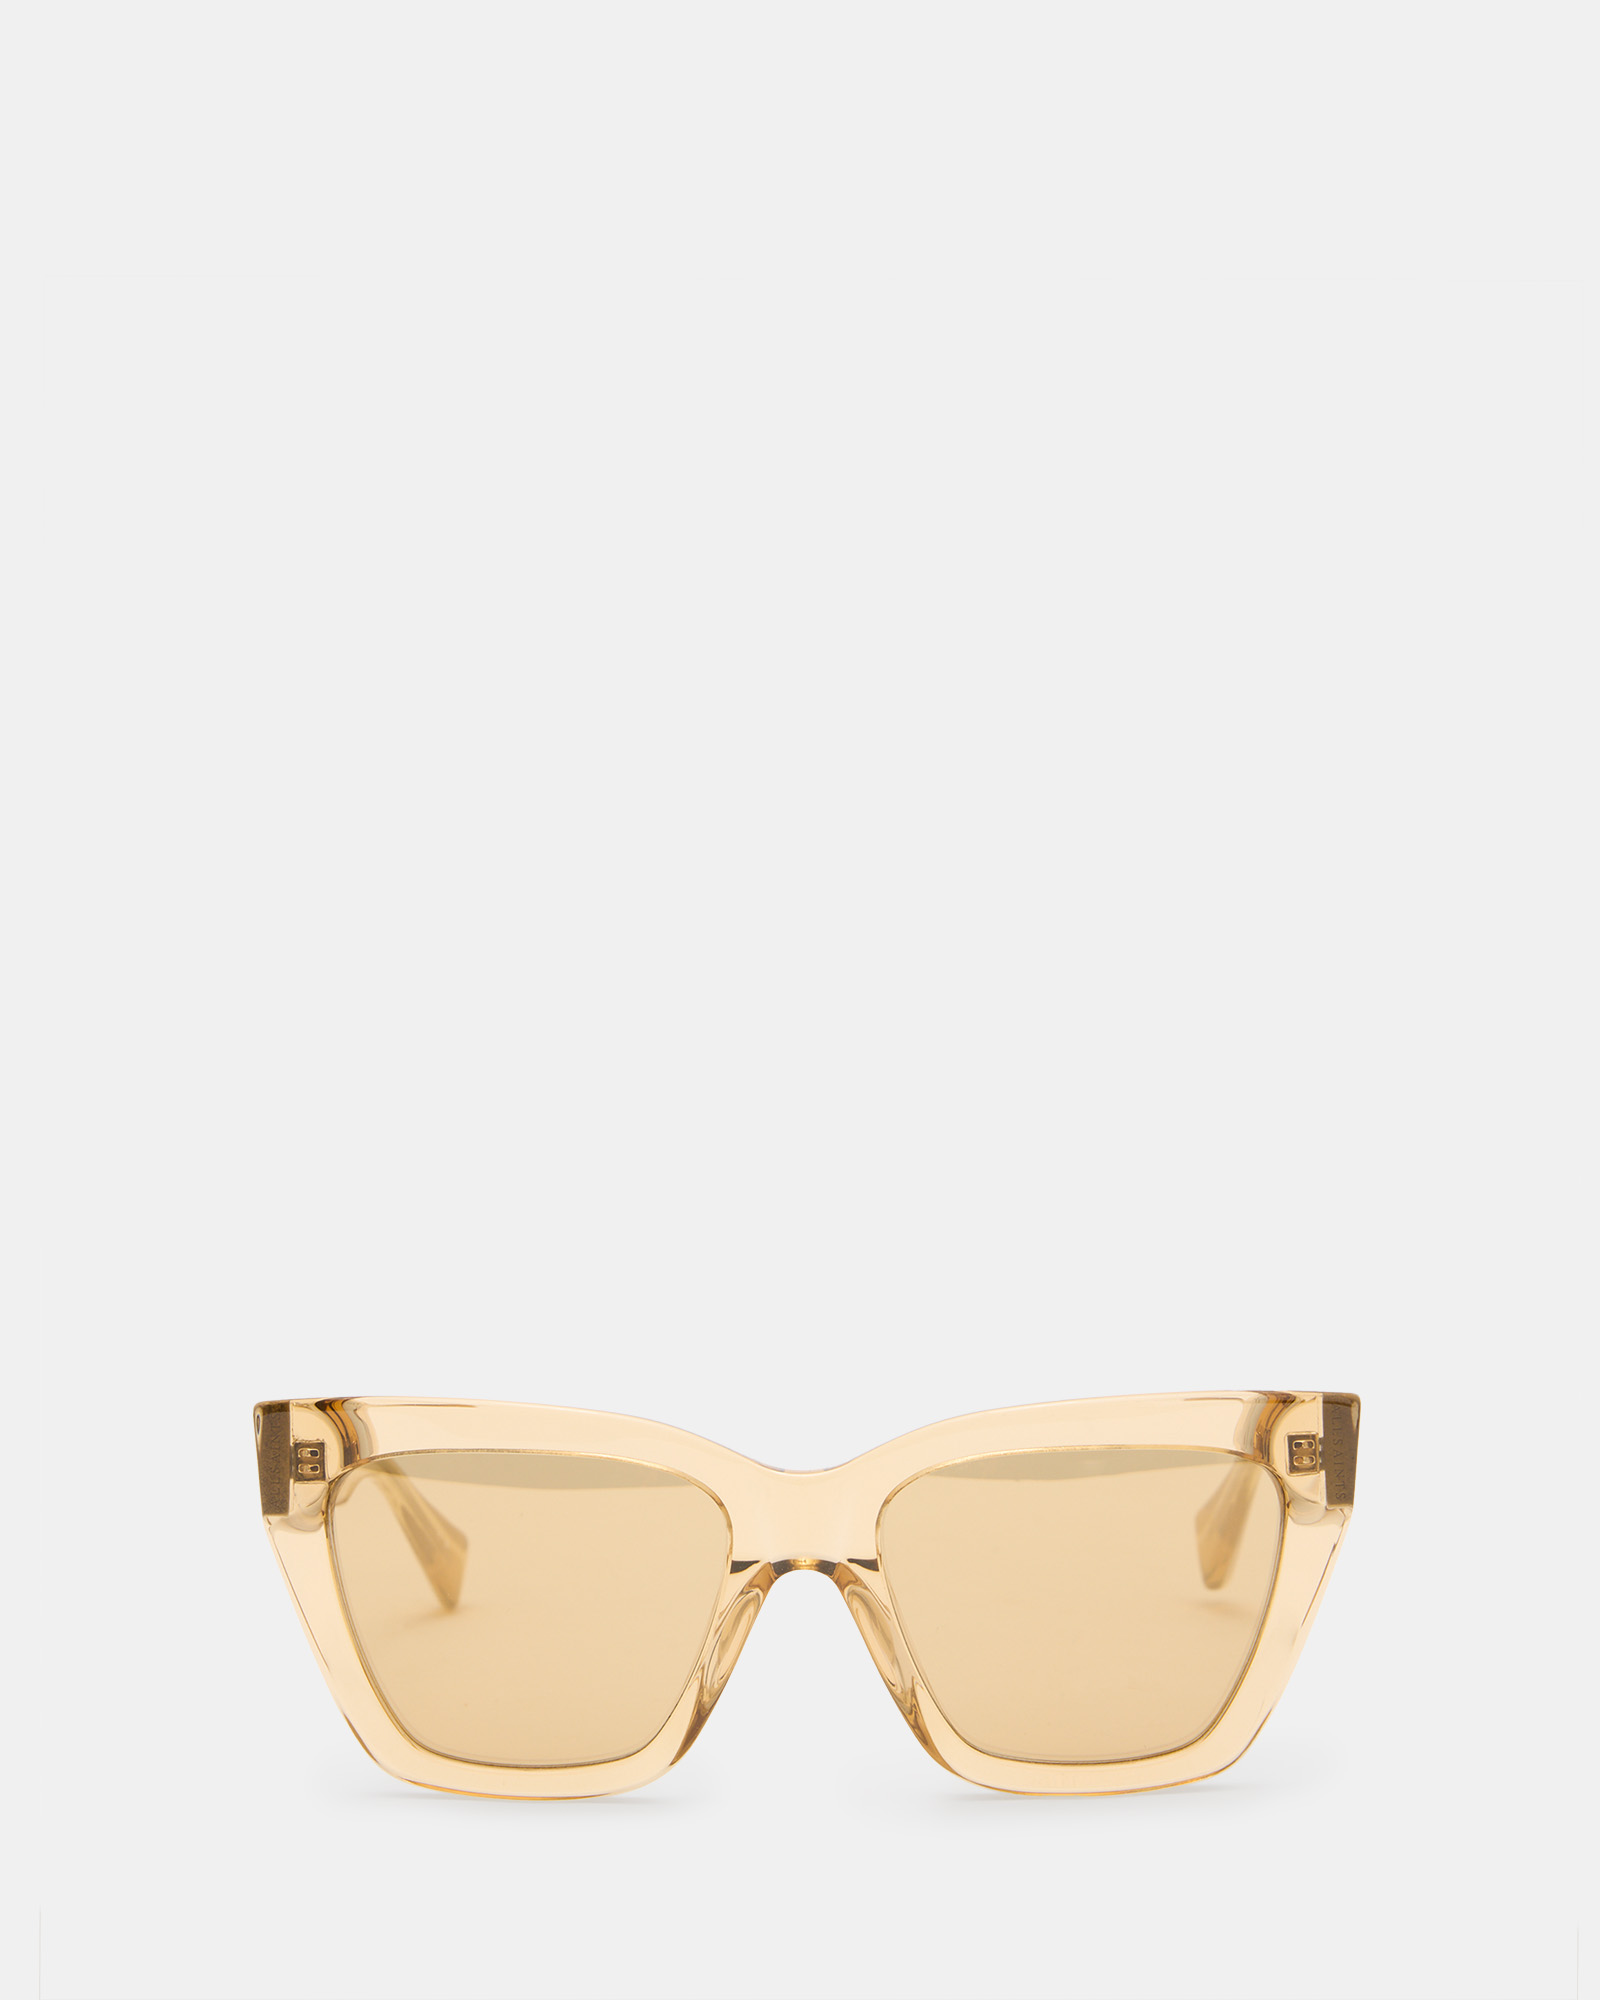 AllSaints Minerva Cat Eye Sunglasses,, MIRROR GOLD